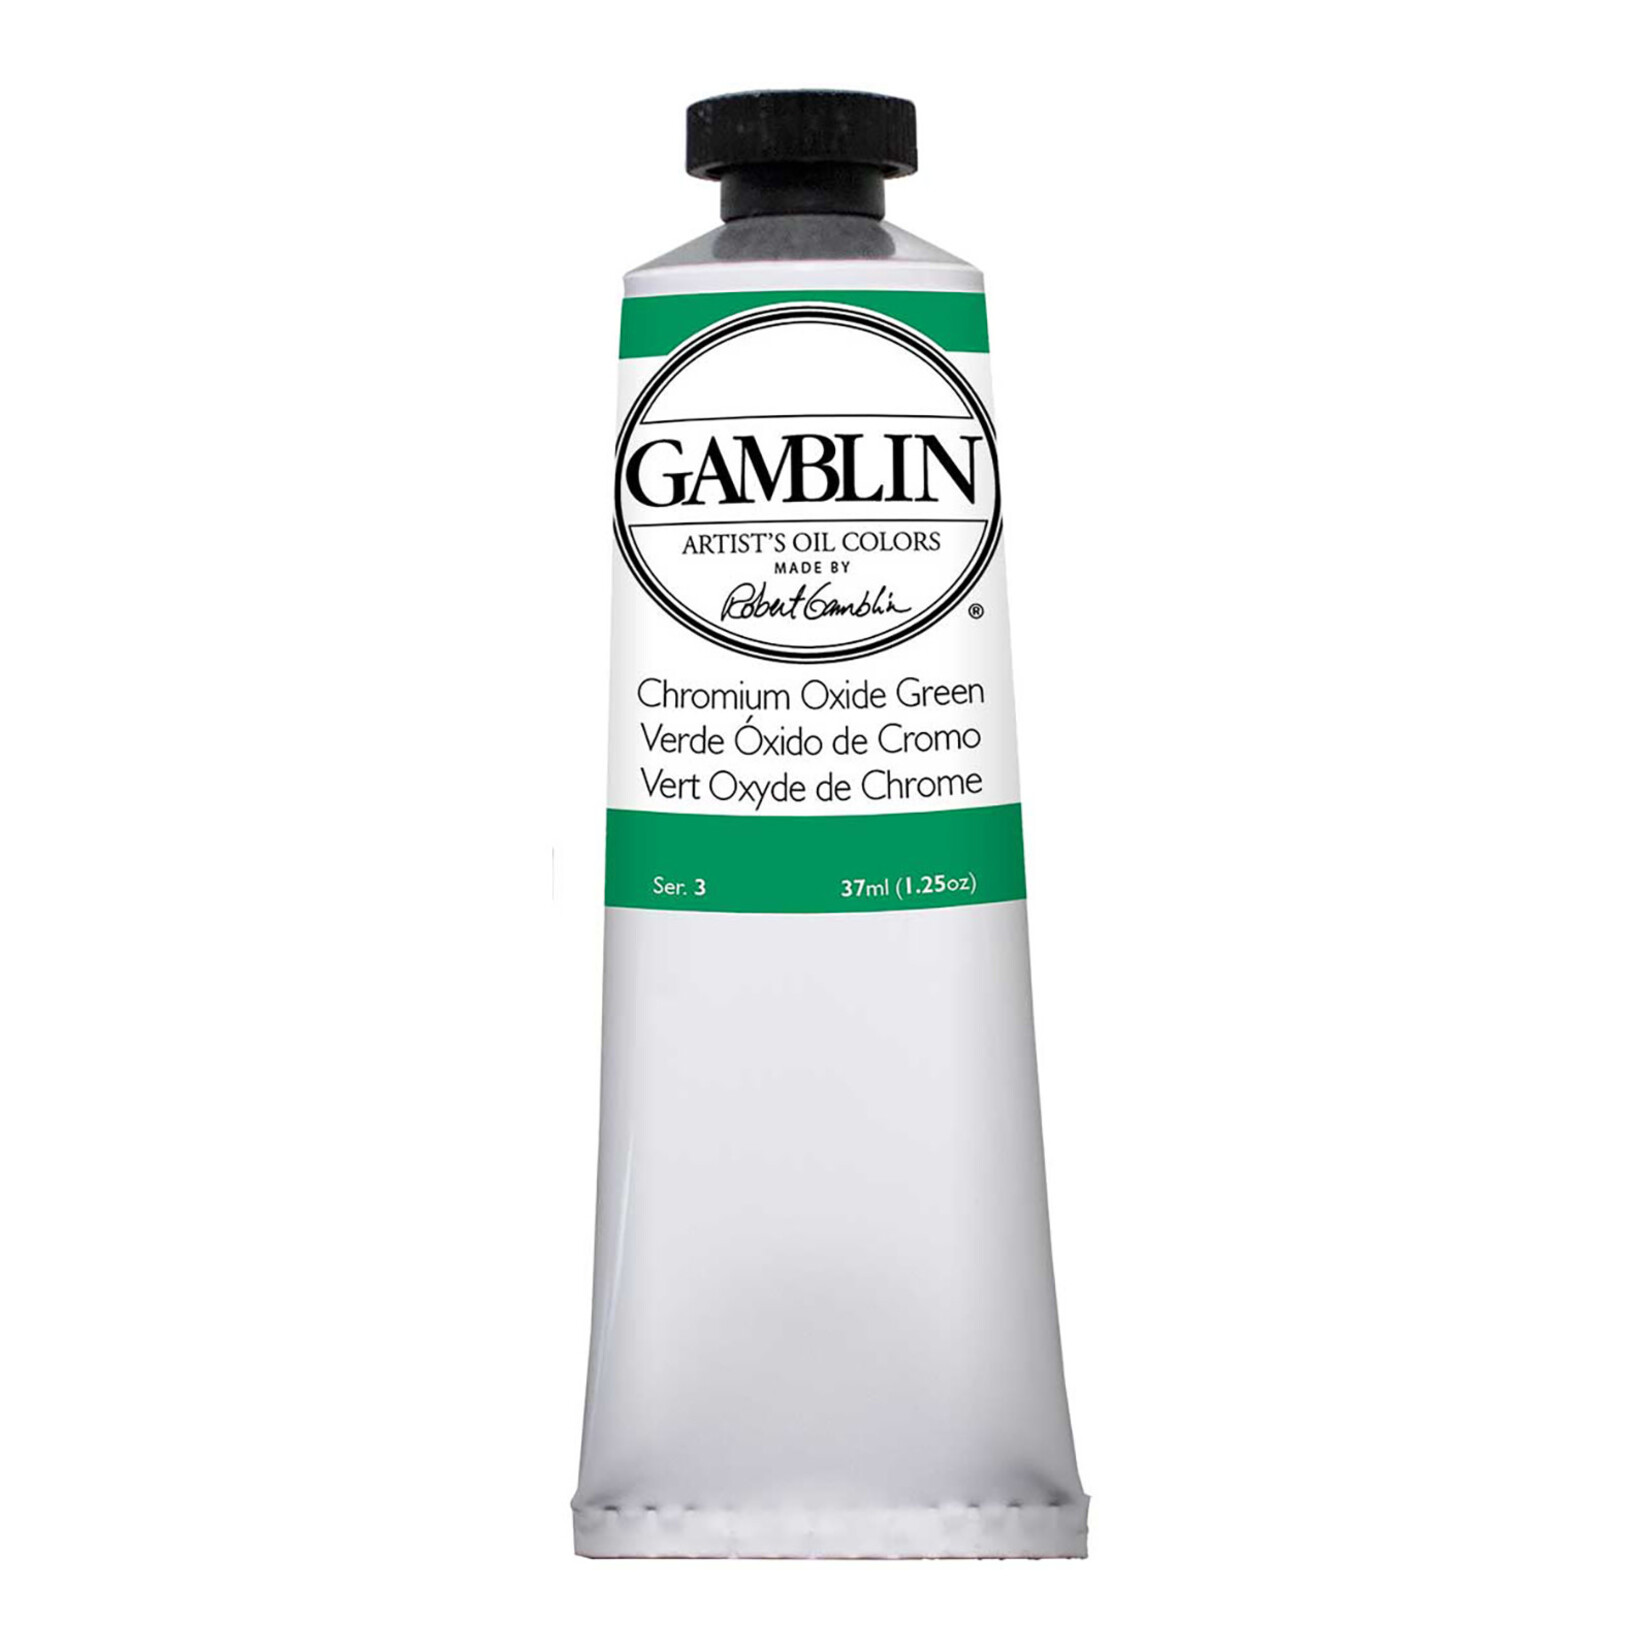 Gamblin Art Oil 37Ml Chromium Oxide Green